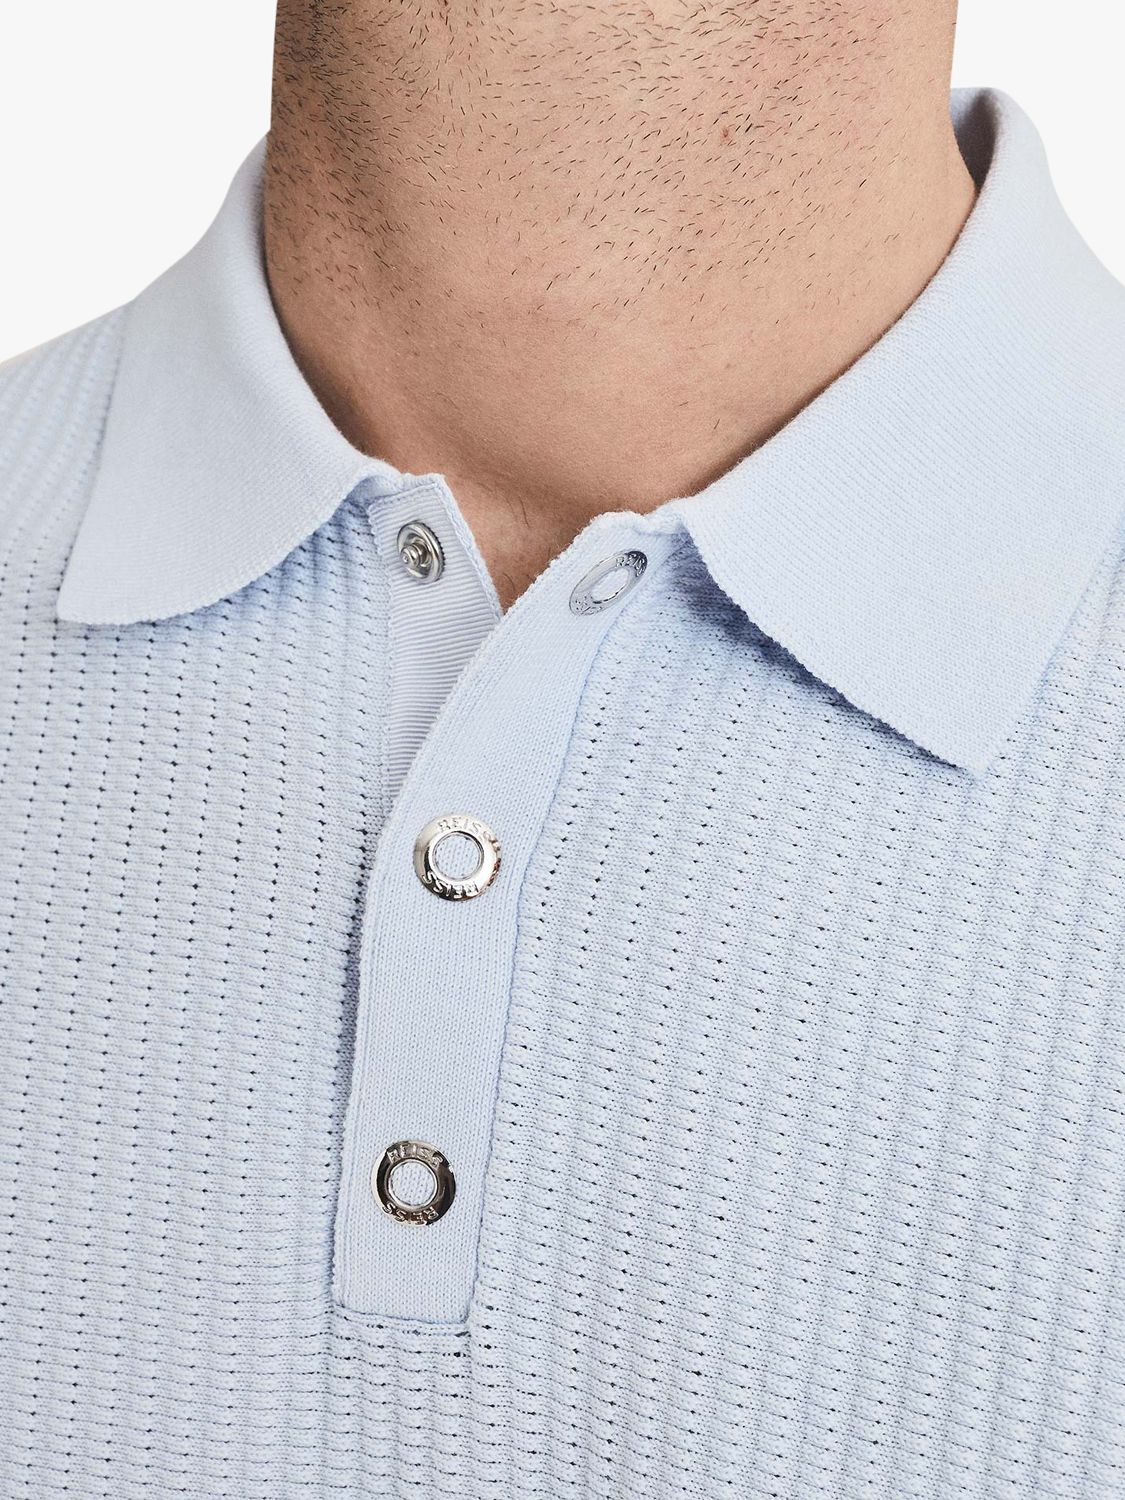 Reiss Clapham Cotton Textured Polo Shirt, Soft Blue at John Lewis ...